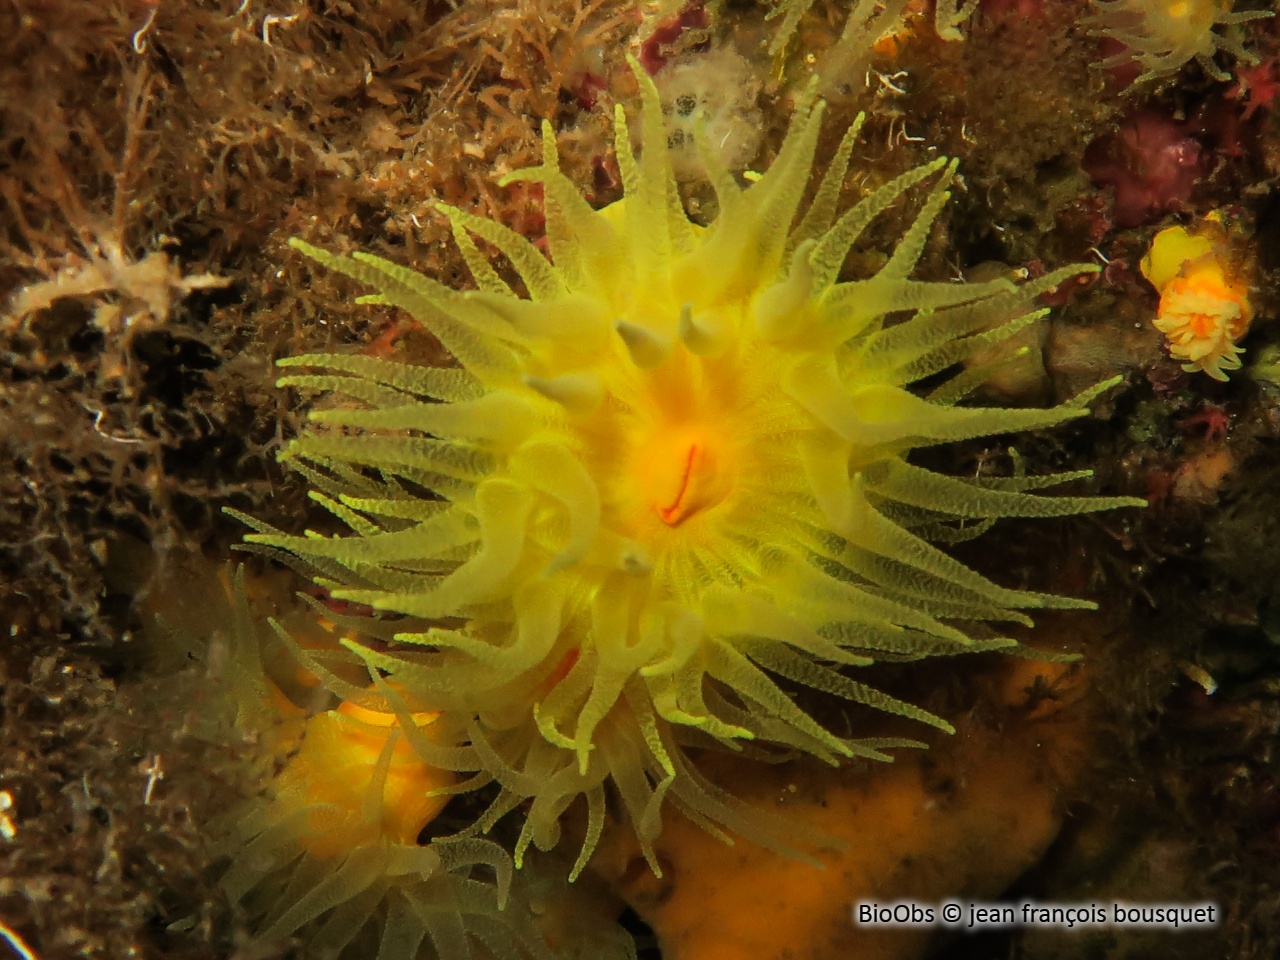 Corail jaune solitaire - Leptopsammia pruvoti - jean françois bousquet - BioObs